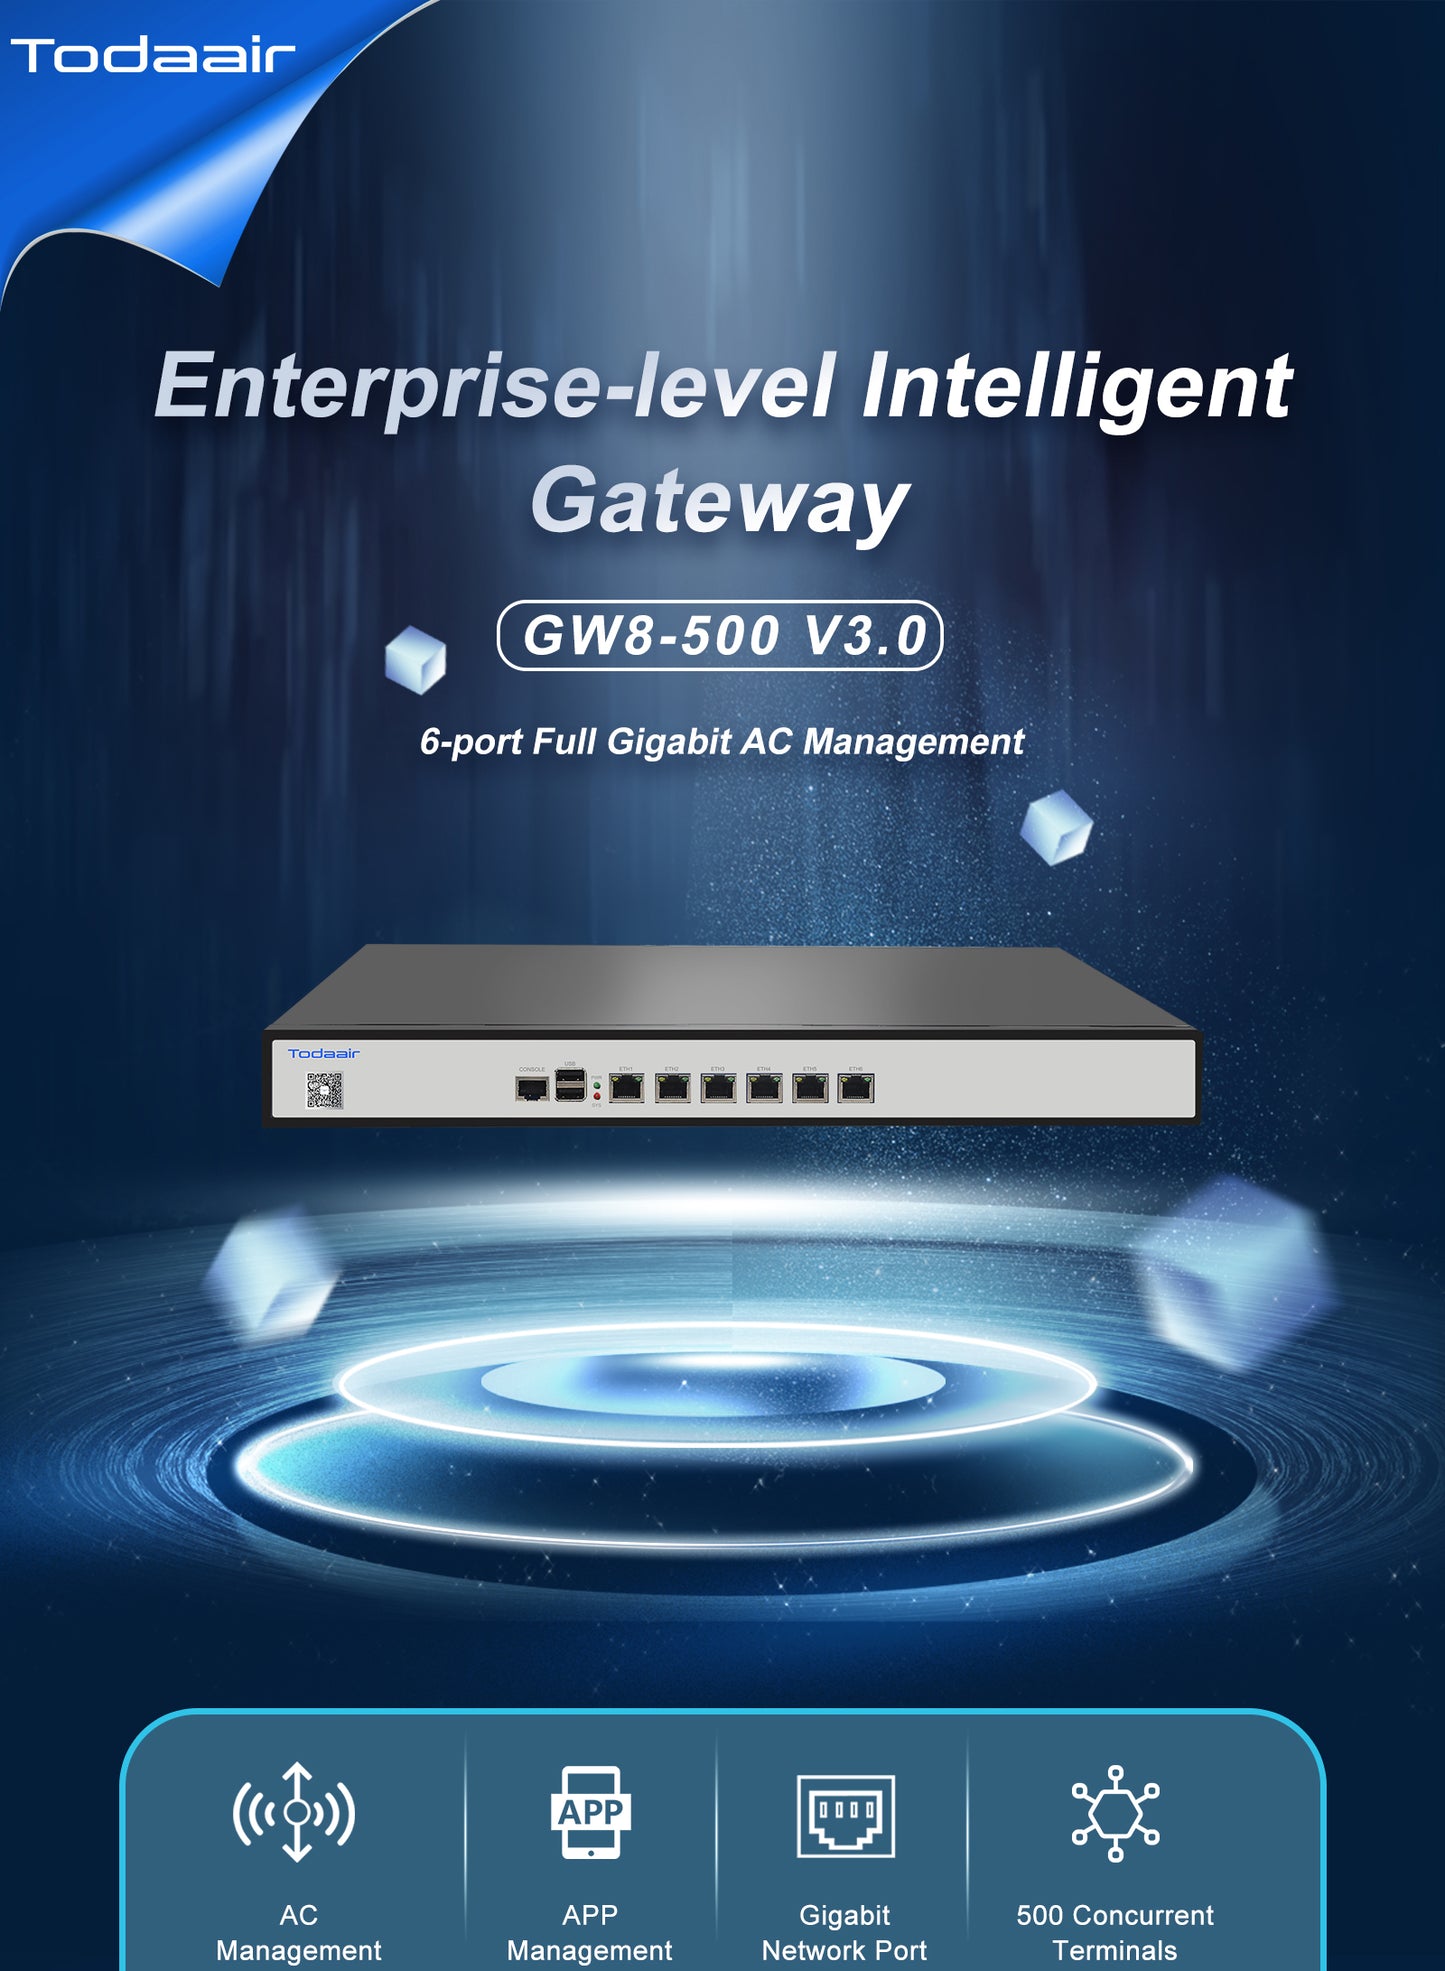 Todaair enterprise level intelligent gateway